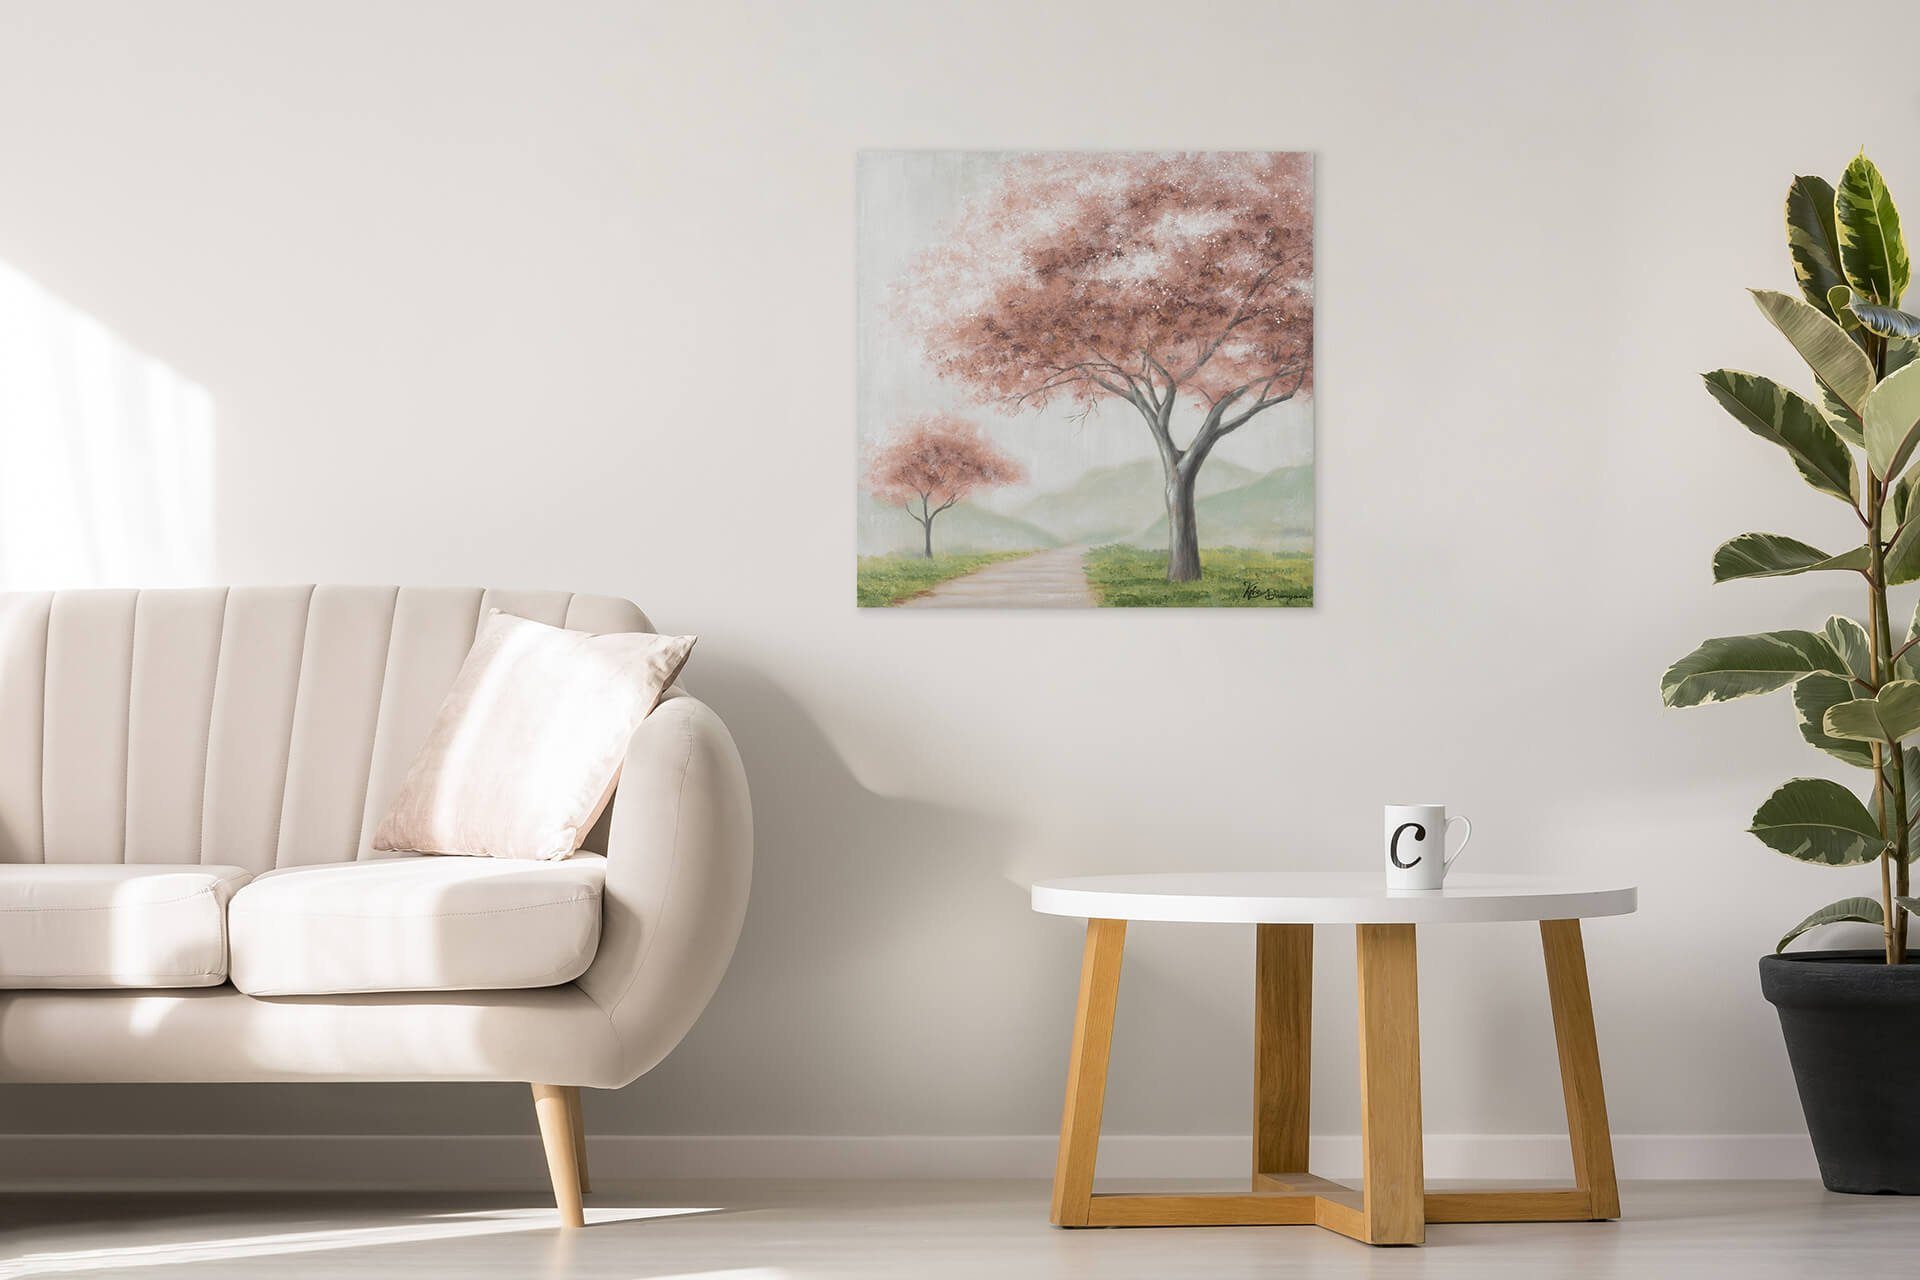 Motifs Wandbild HANDGEMALT KUNSTLOFT 100% Gemälde cm, Wohnzimmer Leinwandbild 80x80 Japanese